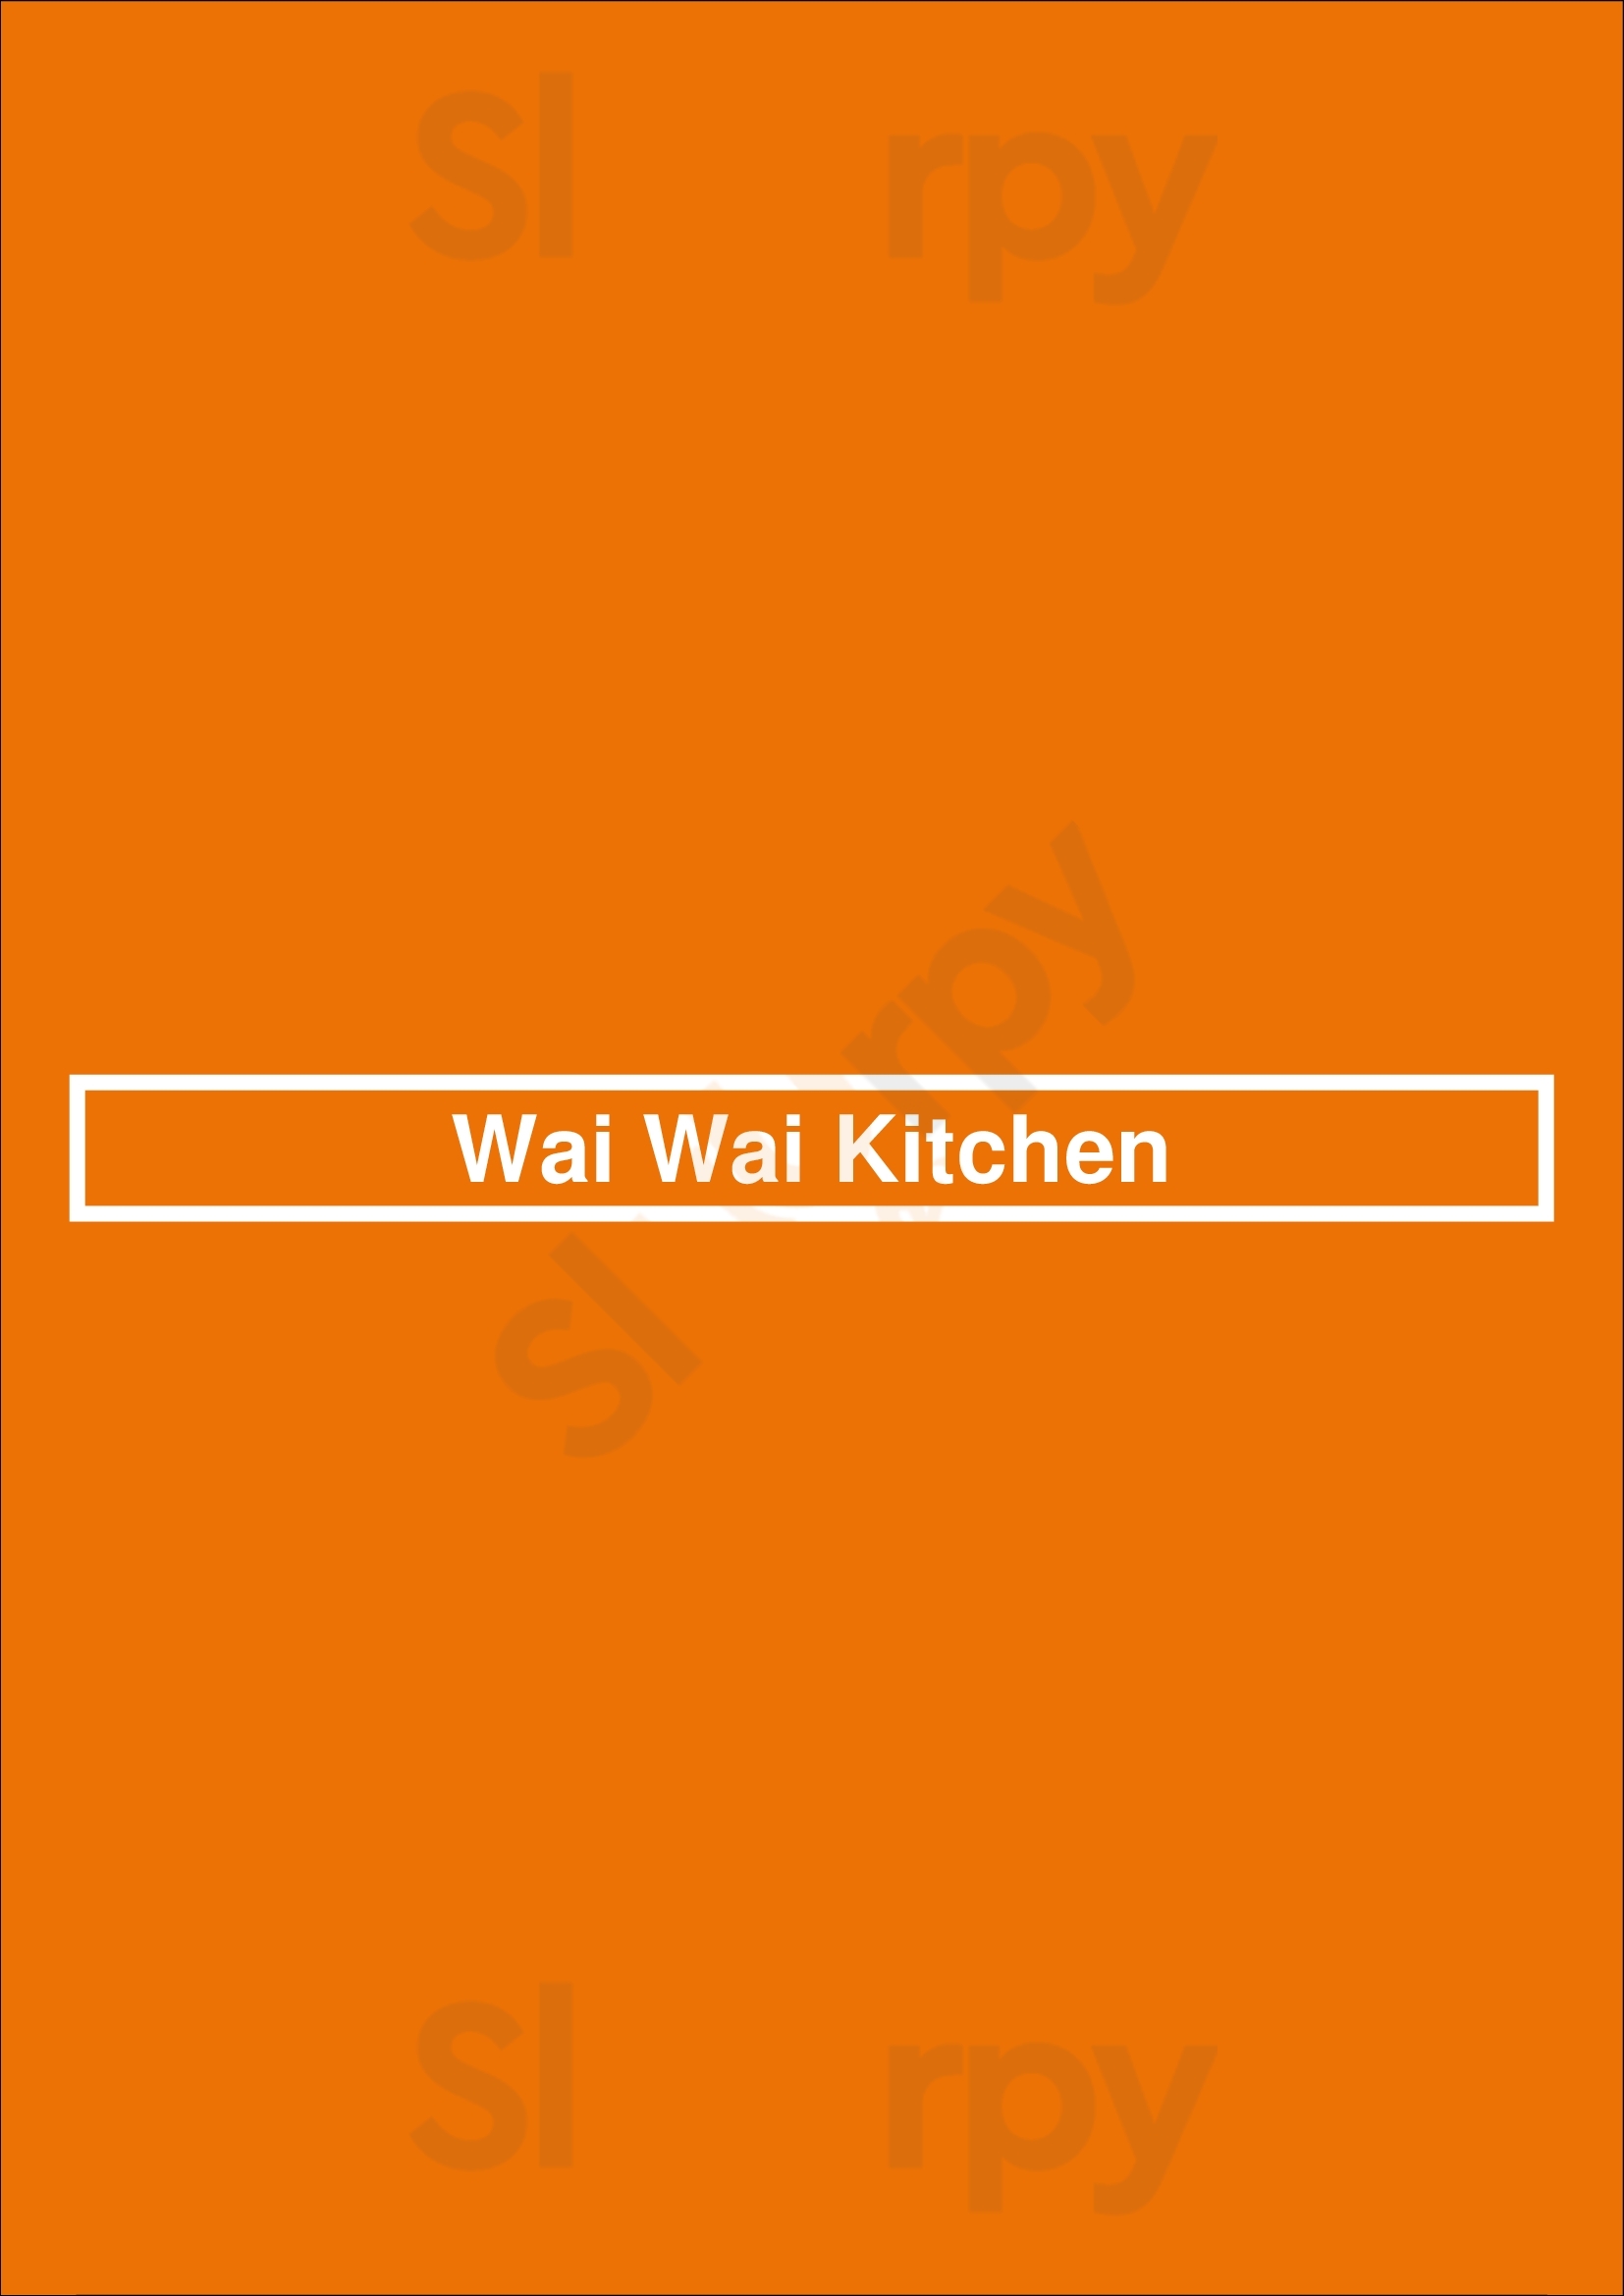 Wai Wai Kitchen Dallas Menu - 1